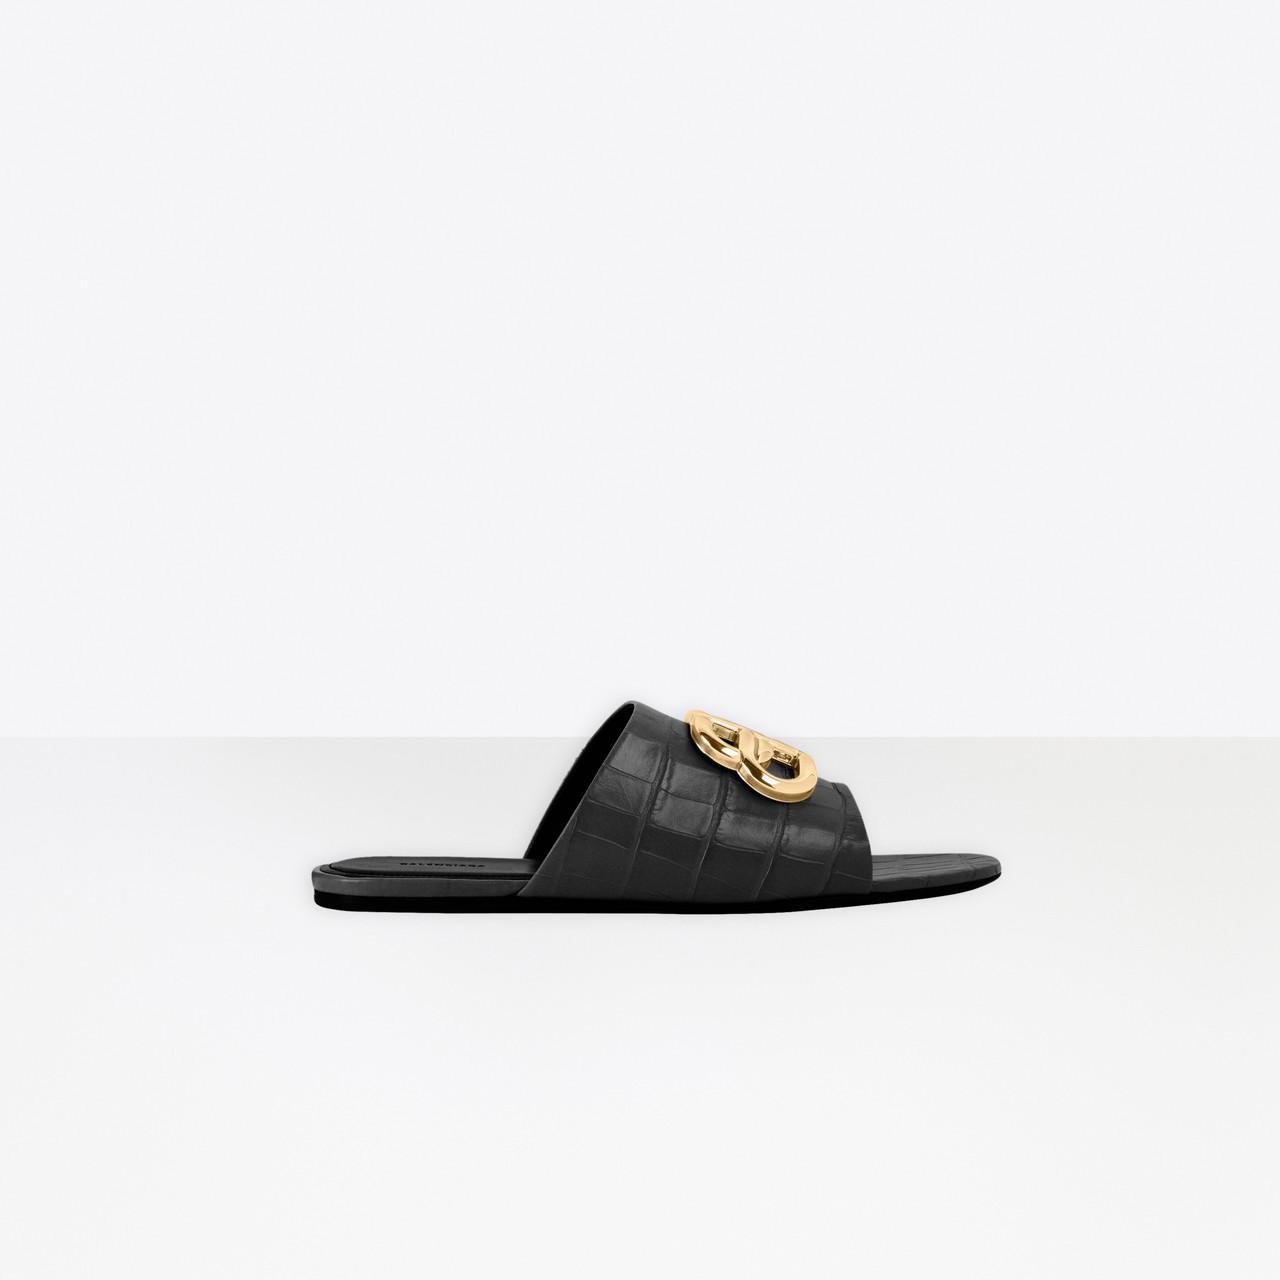 Balenciaga Leather Oval Bb Slide Sandal in Black / Gold (Black) - Lyst